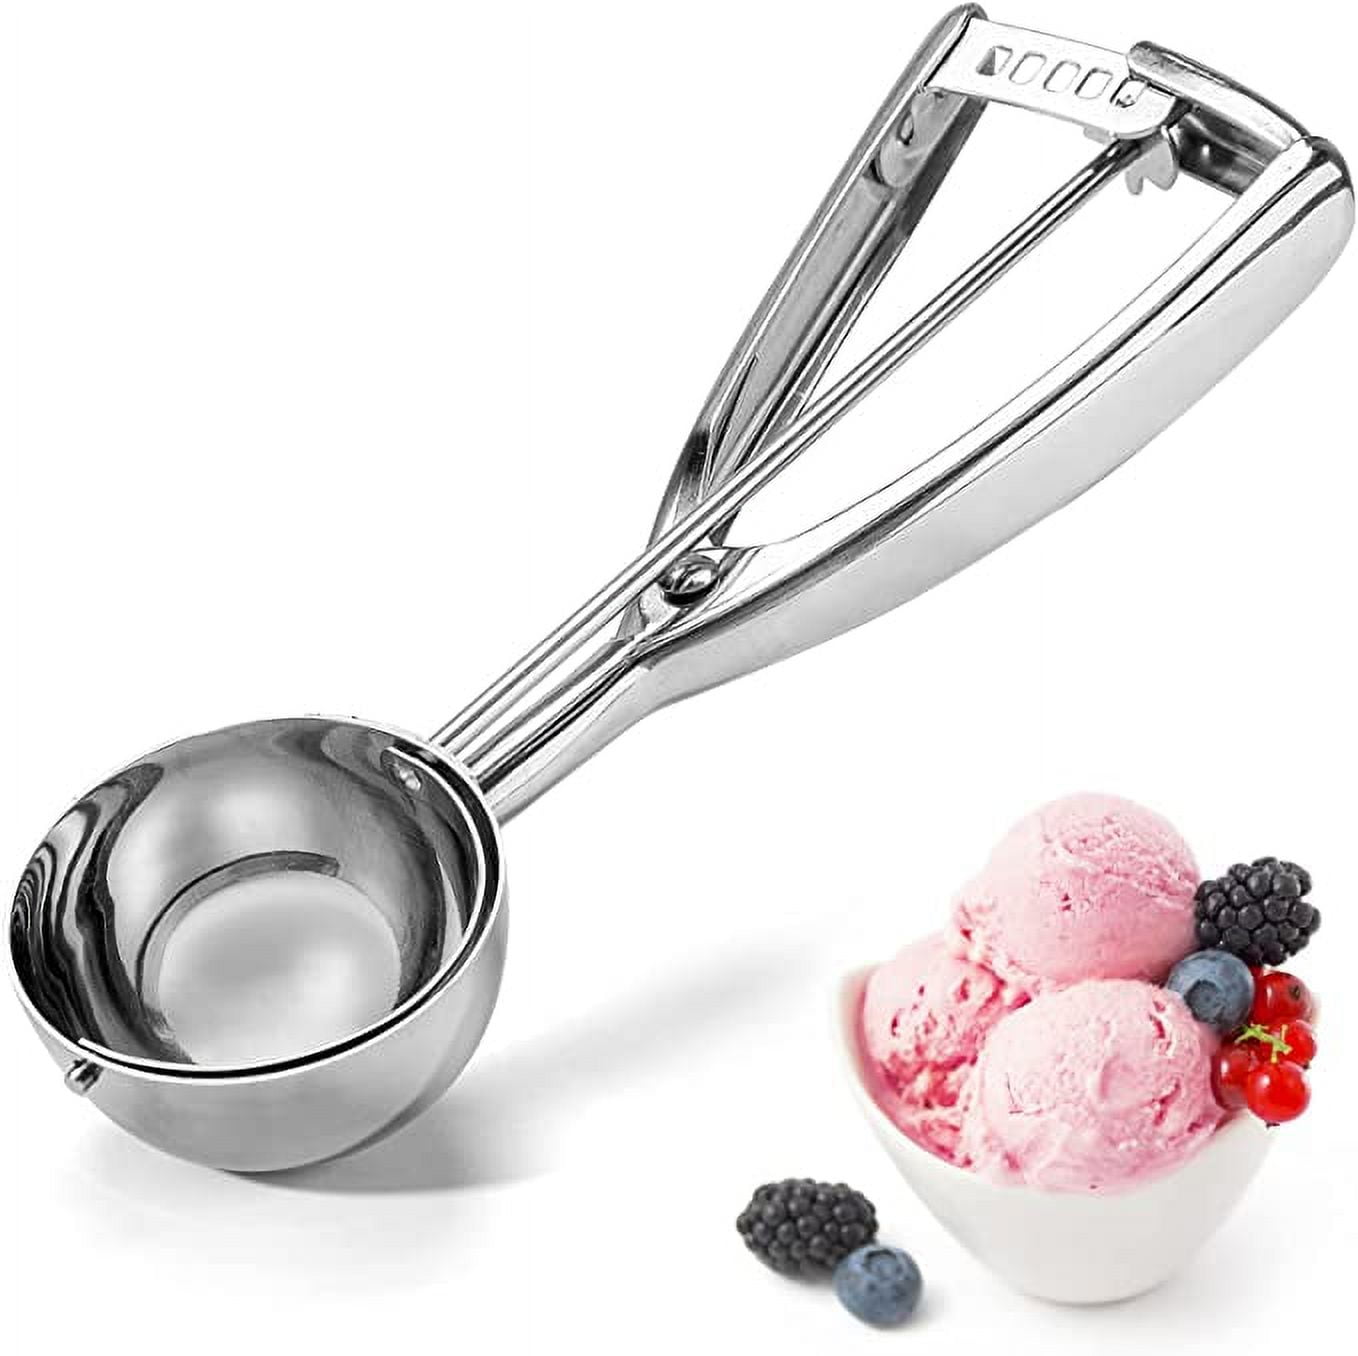 Emoly Ice Cream Scoop Set, Steel Ice Cream Scoop, Cookie Dough Metal Cupcake Spoons Include Large-Medium-Small Sizes Balls for Ice Cream, Cupcake